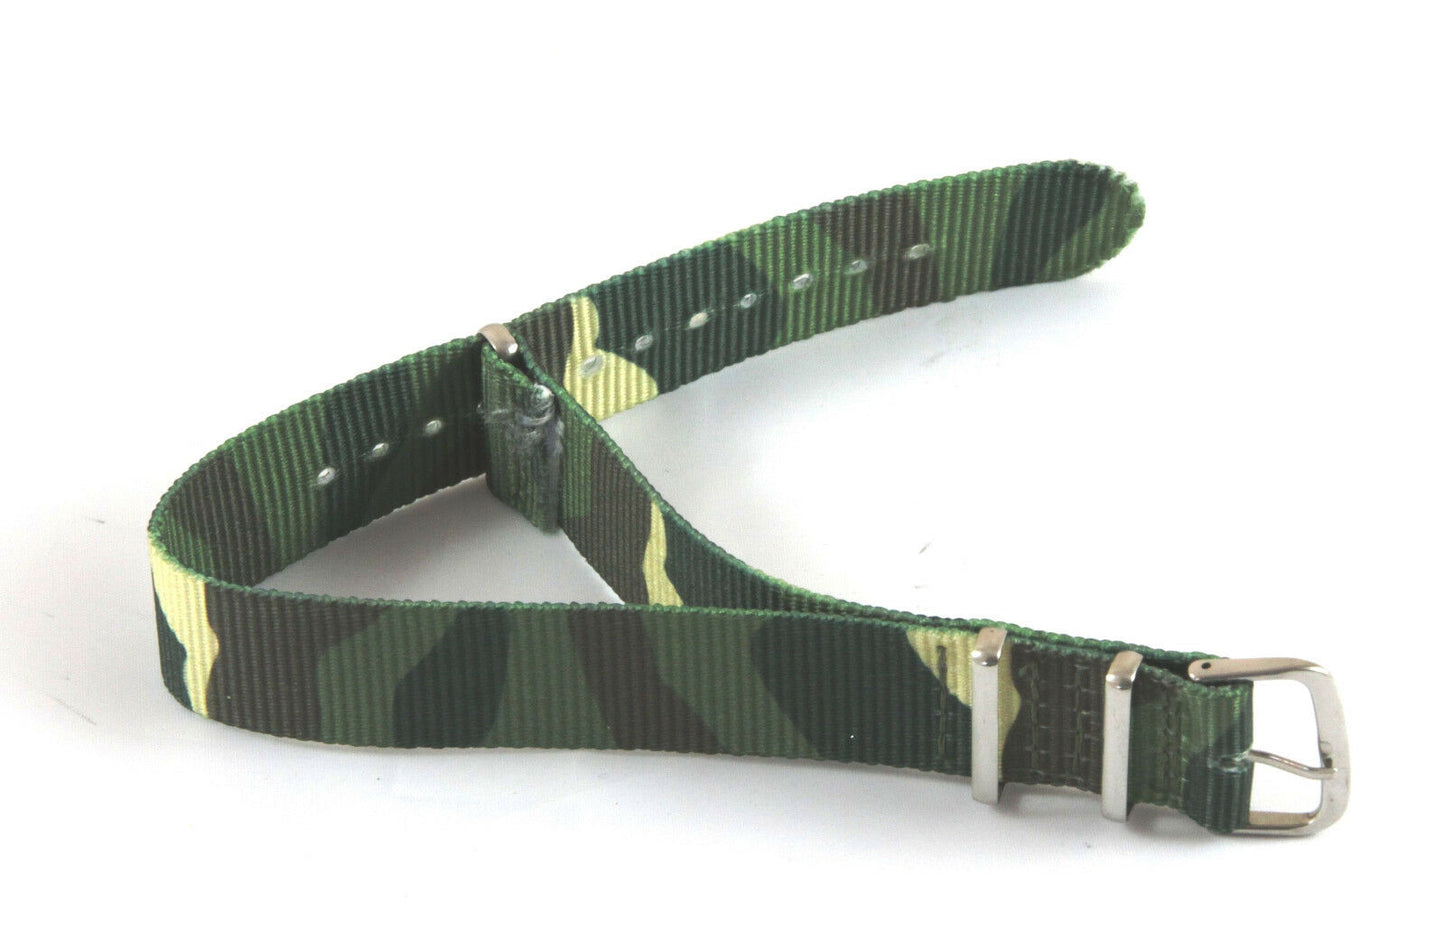 Textil Ersatzband Uhrenarmband Durchzugsband camouflage Nylon - 18mm, 20mm, 22mm